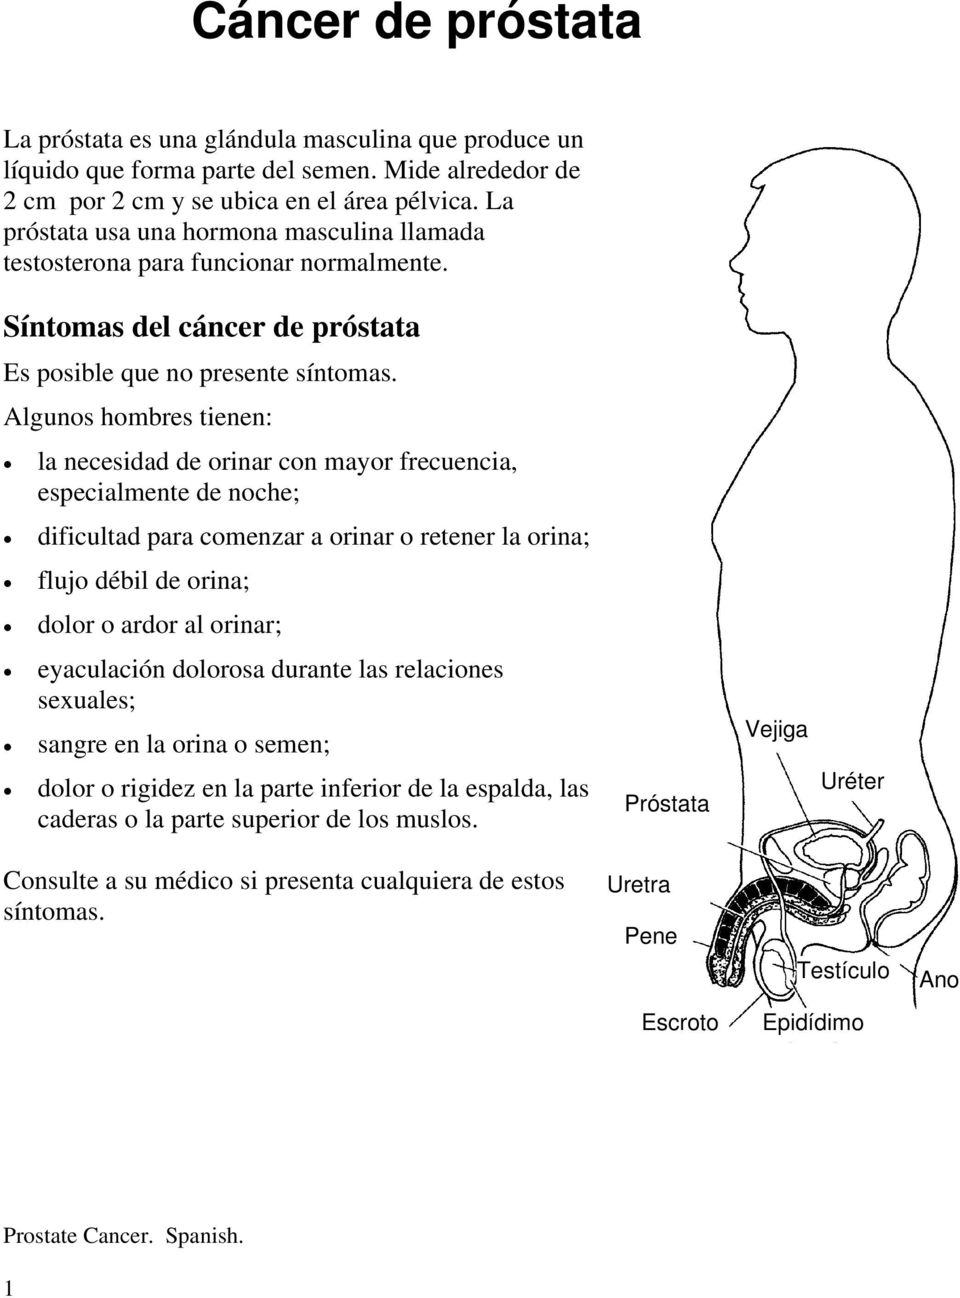 Nitroglicerin és prostatitis)